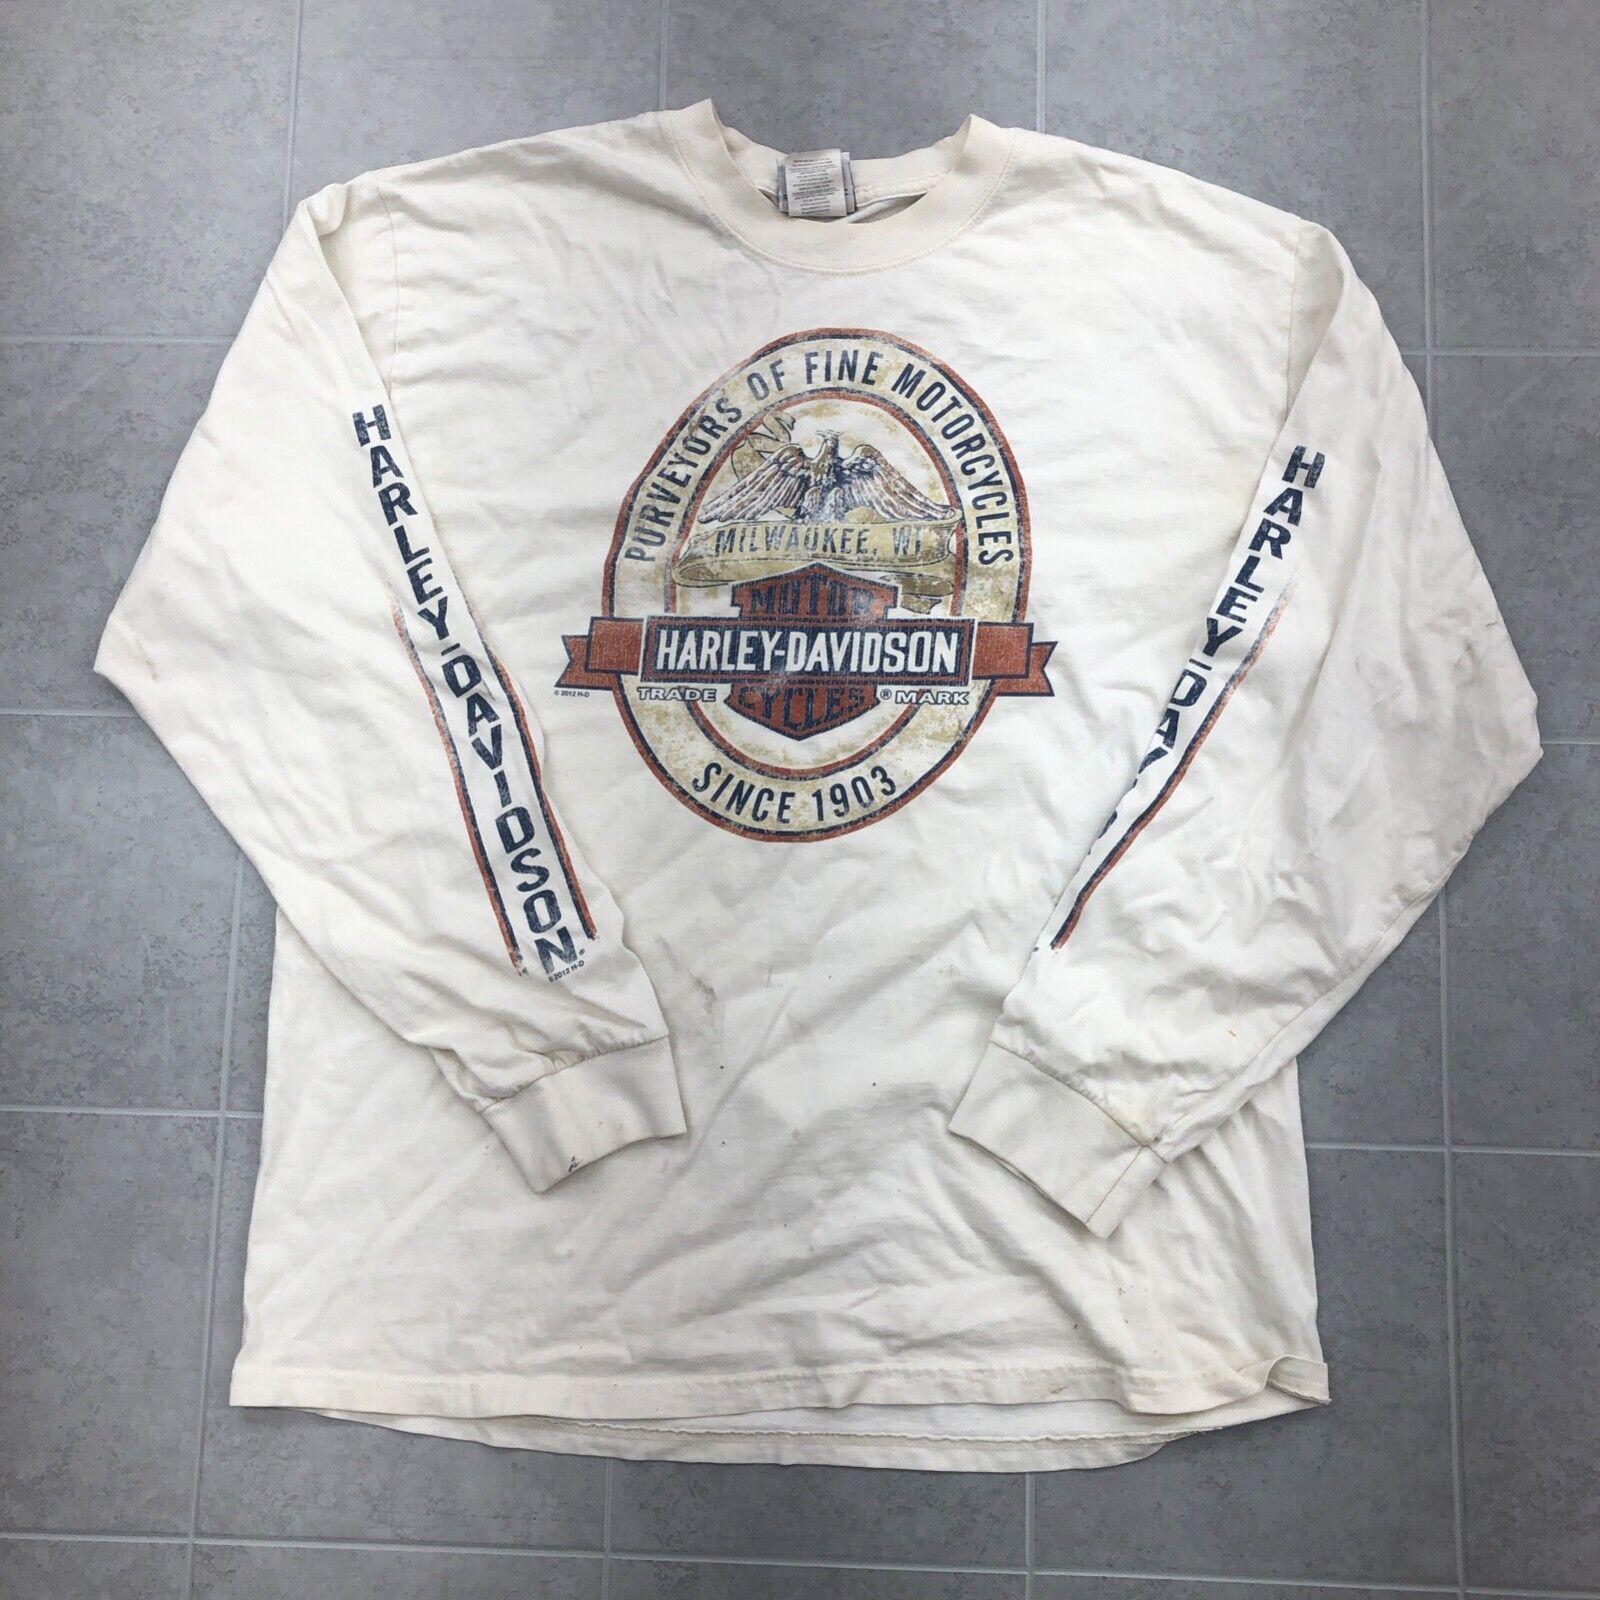 '12 Harley Davidson White Motorcycle Connection Joplin MO T-Shirt Adult Size L